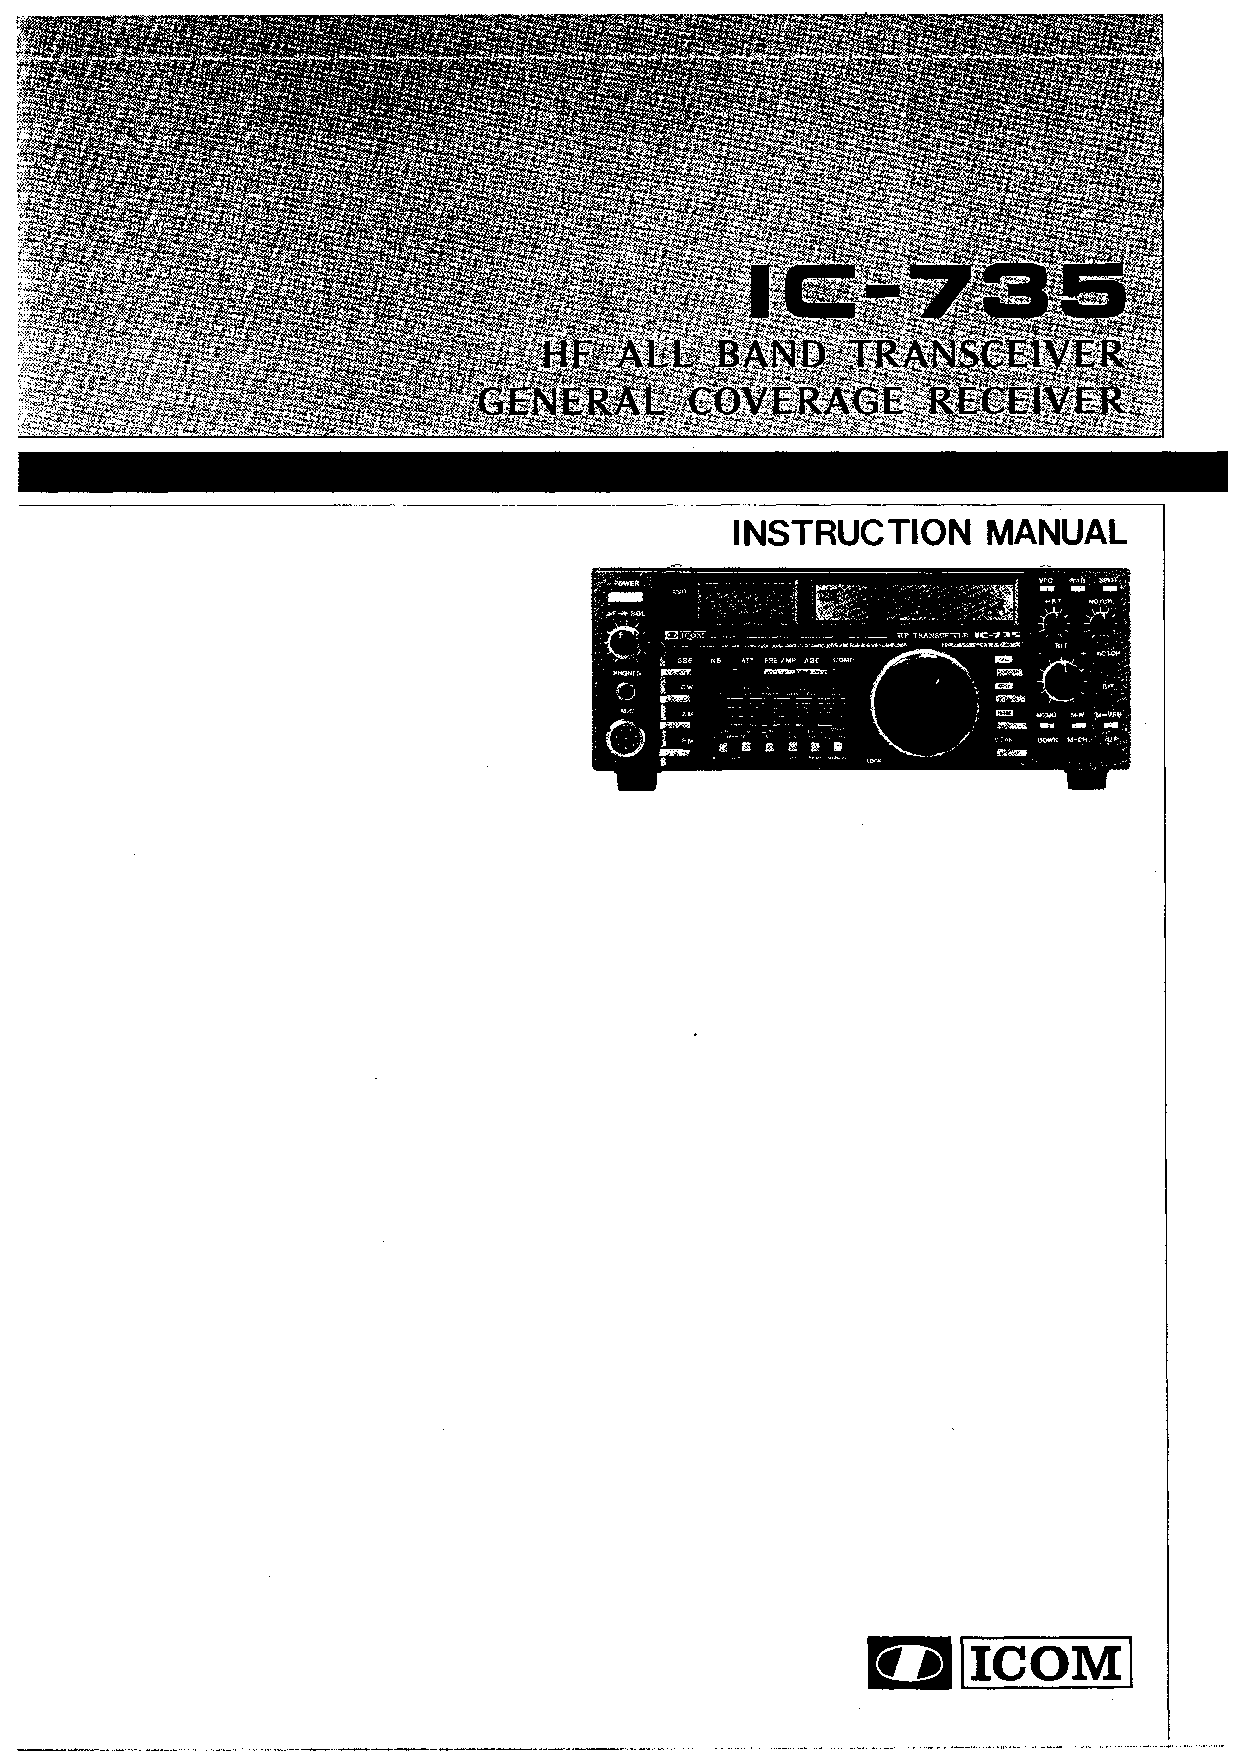 Icom IC-735 User Manual